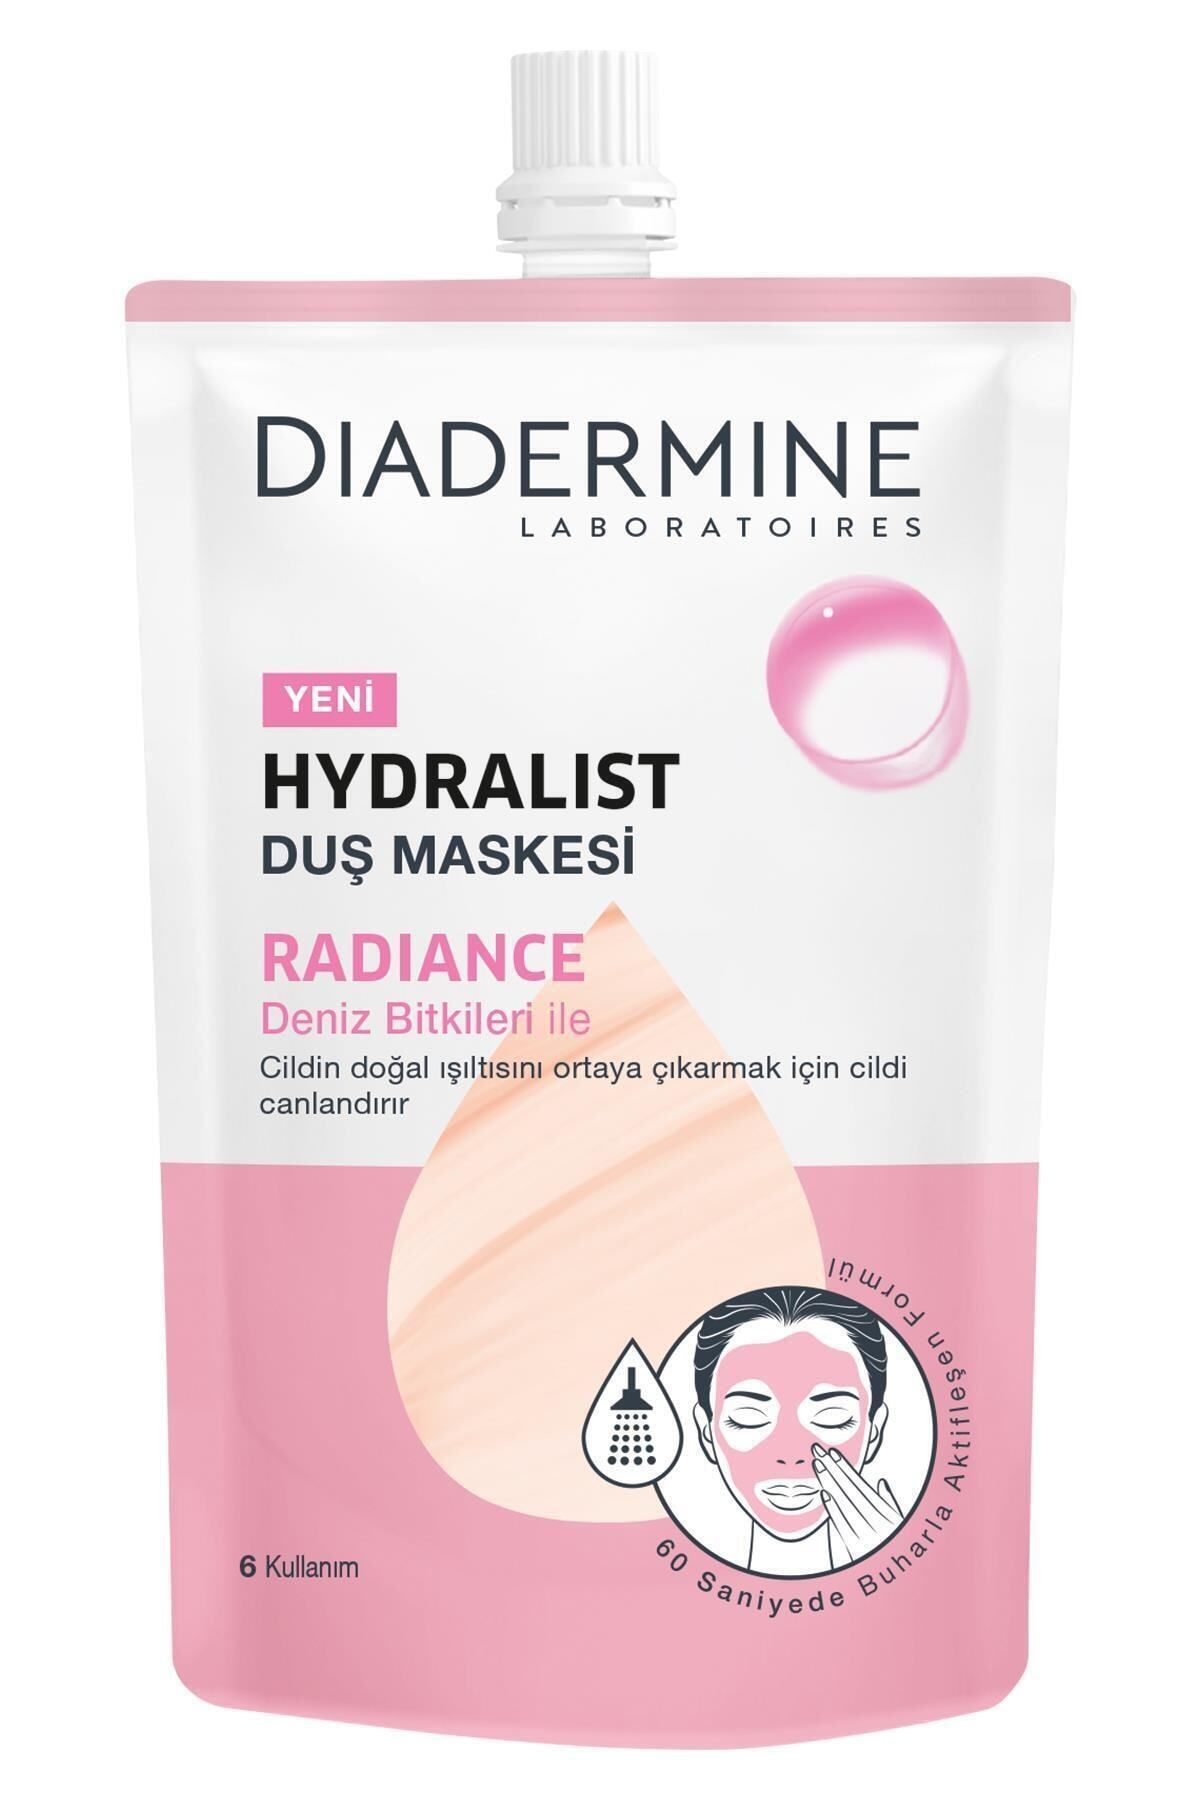 Diadermine Hydralist Duş Maskesi Radiance 50 ml 4015100308372